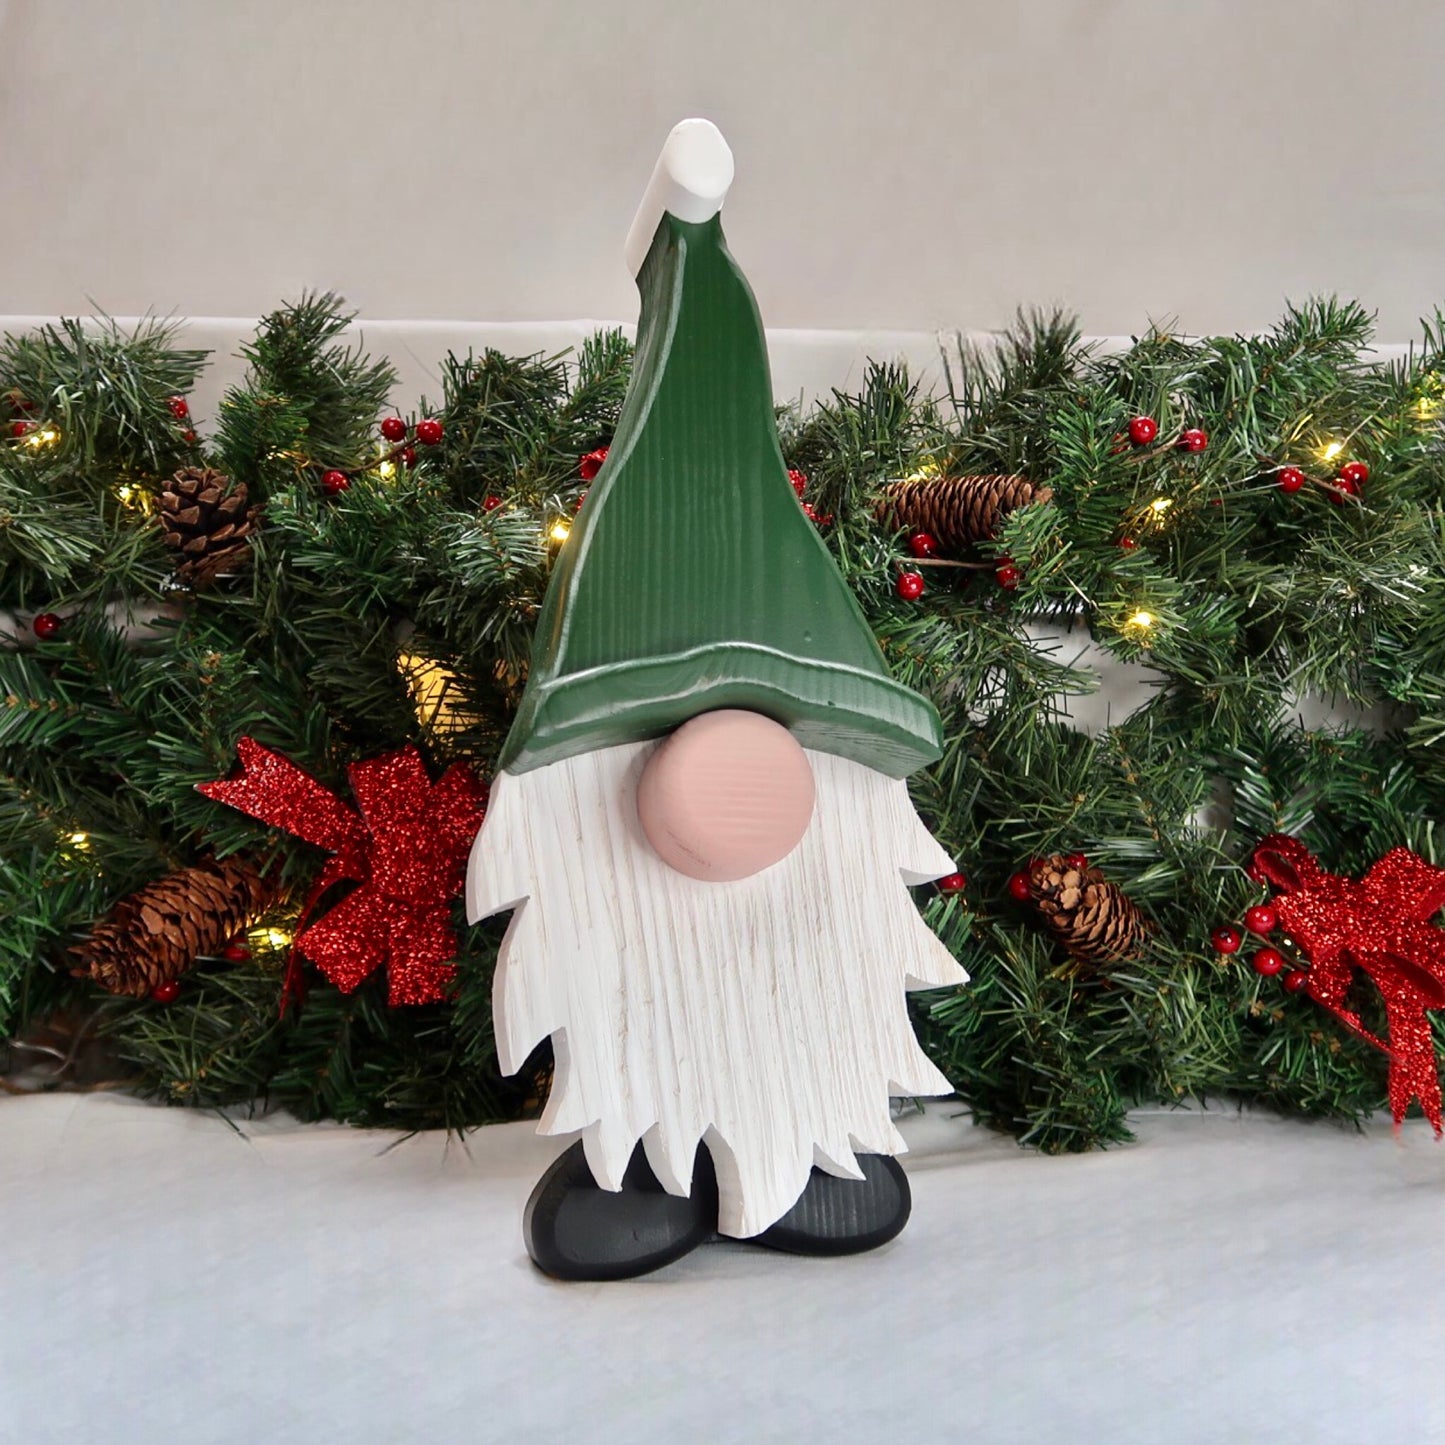 Festive Gonk - Handmade Decorative Wooden Gnome - Forest Green